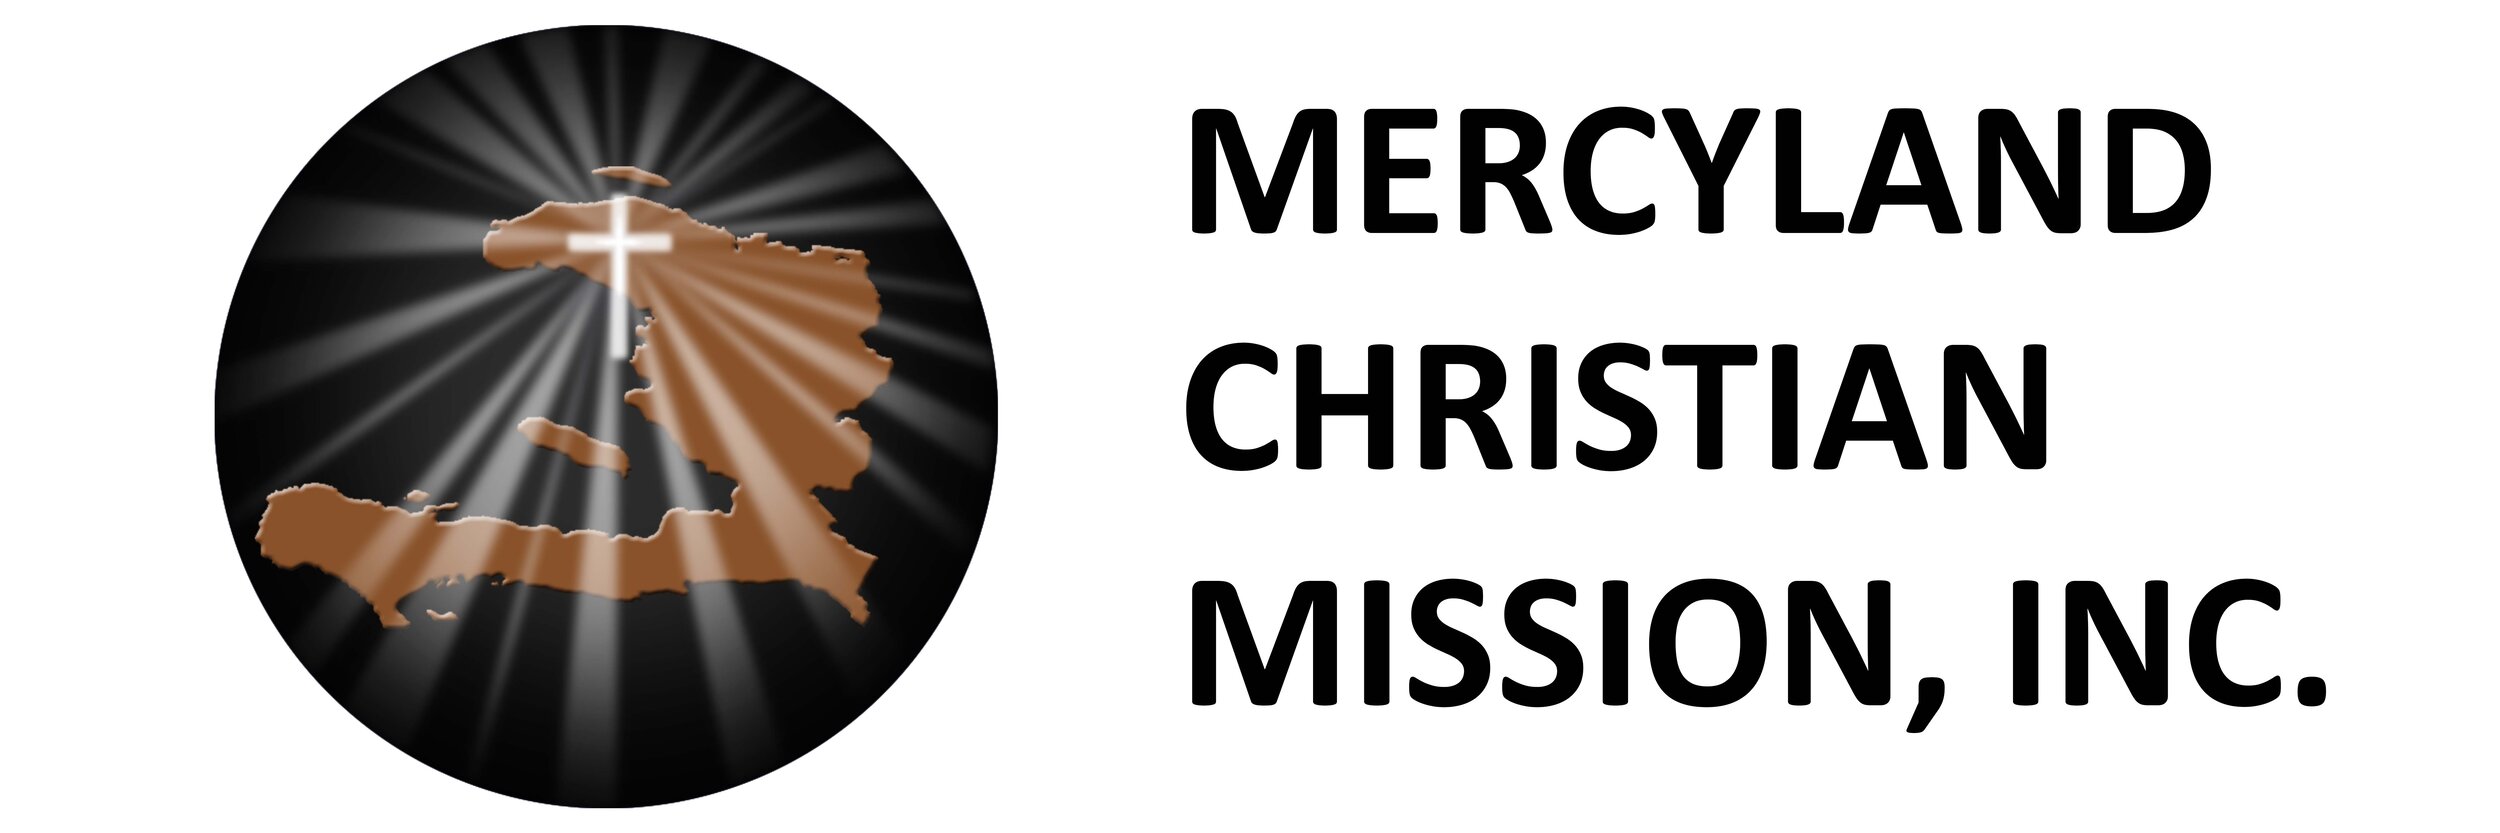 Mercyland Christian Mission